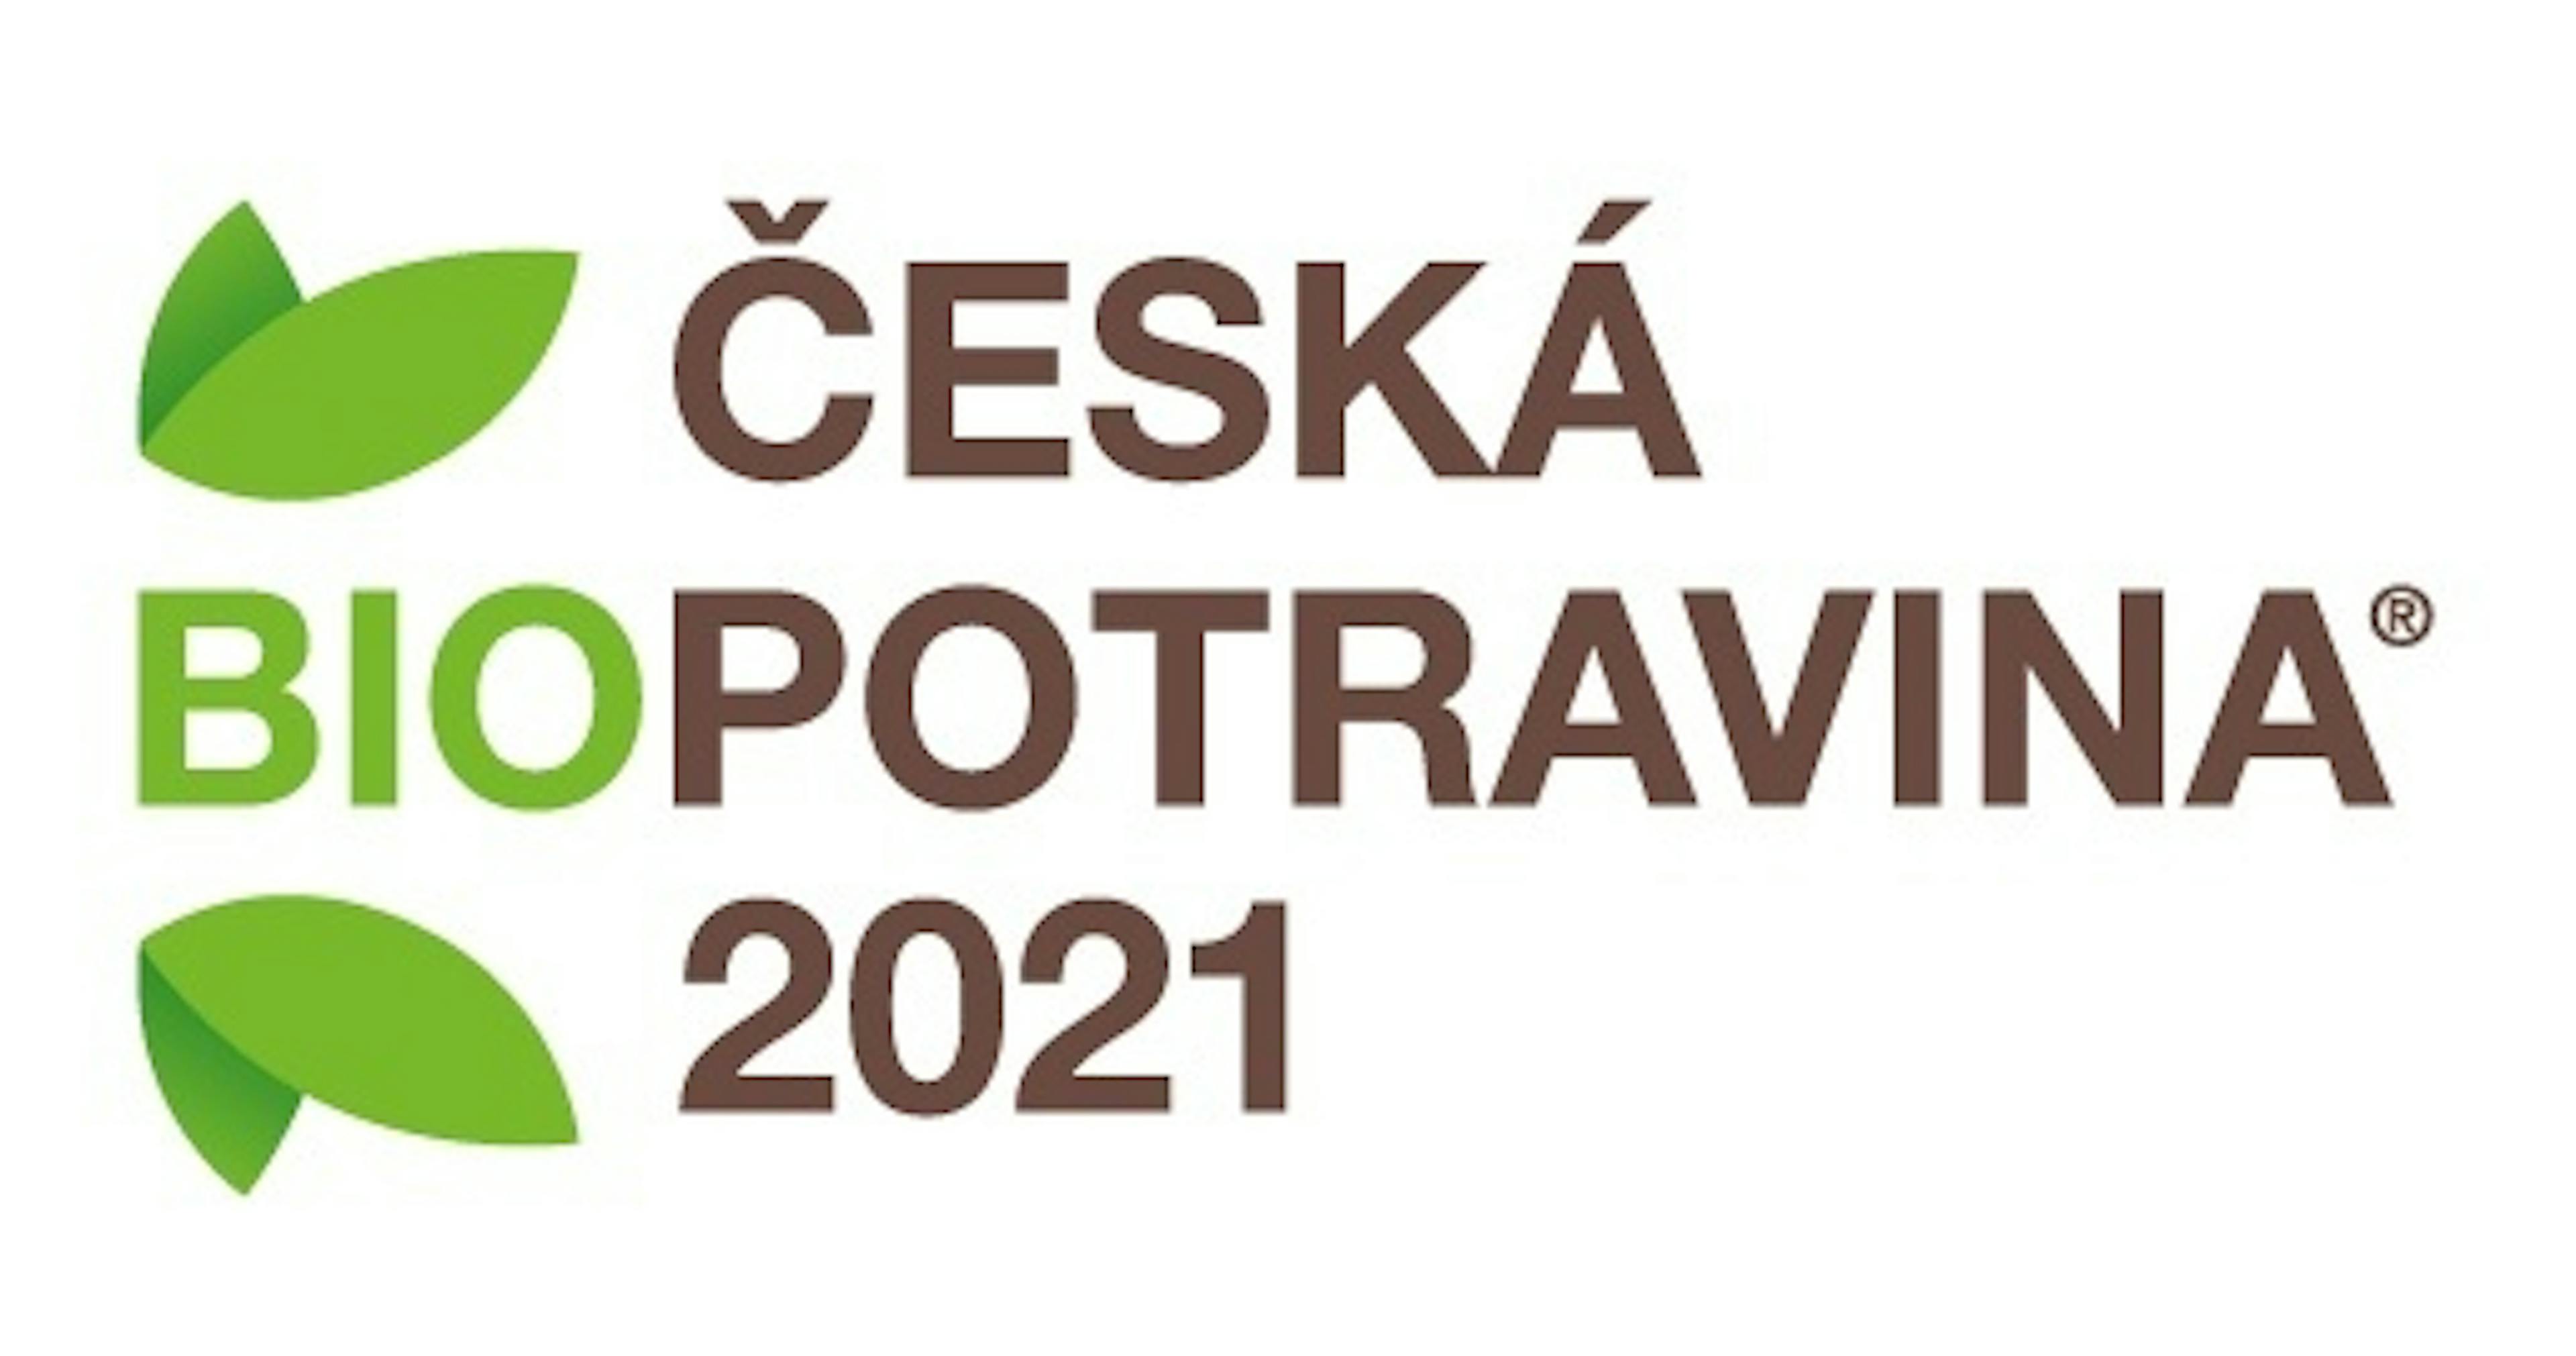 Česká biopotravina - logo 2021